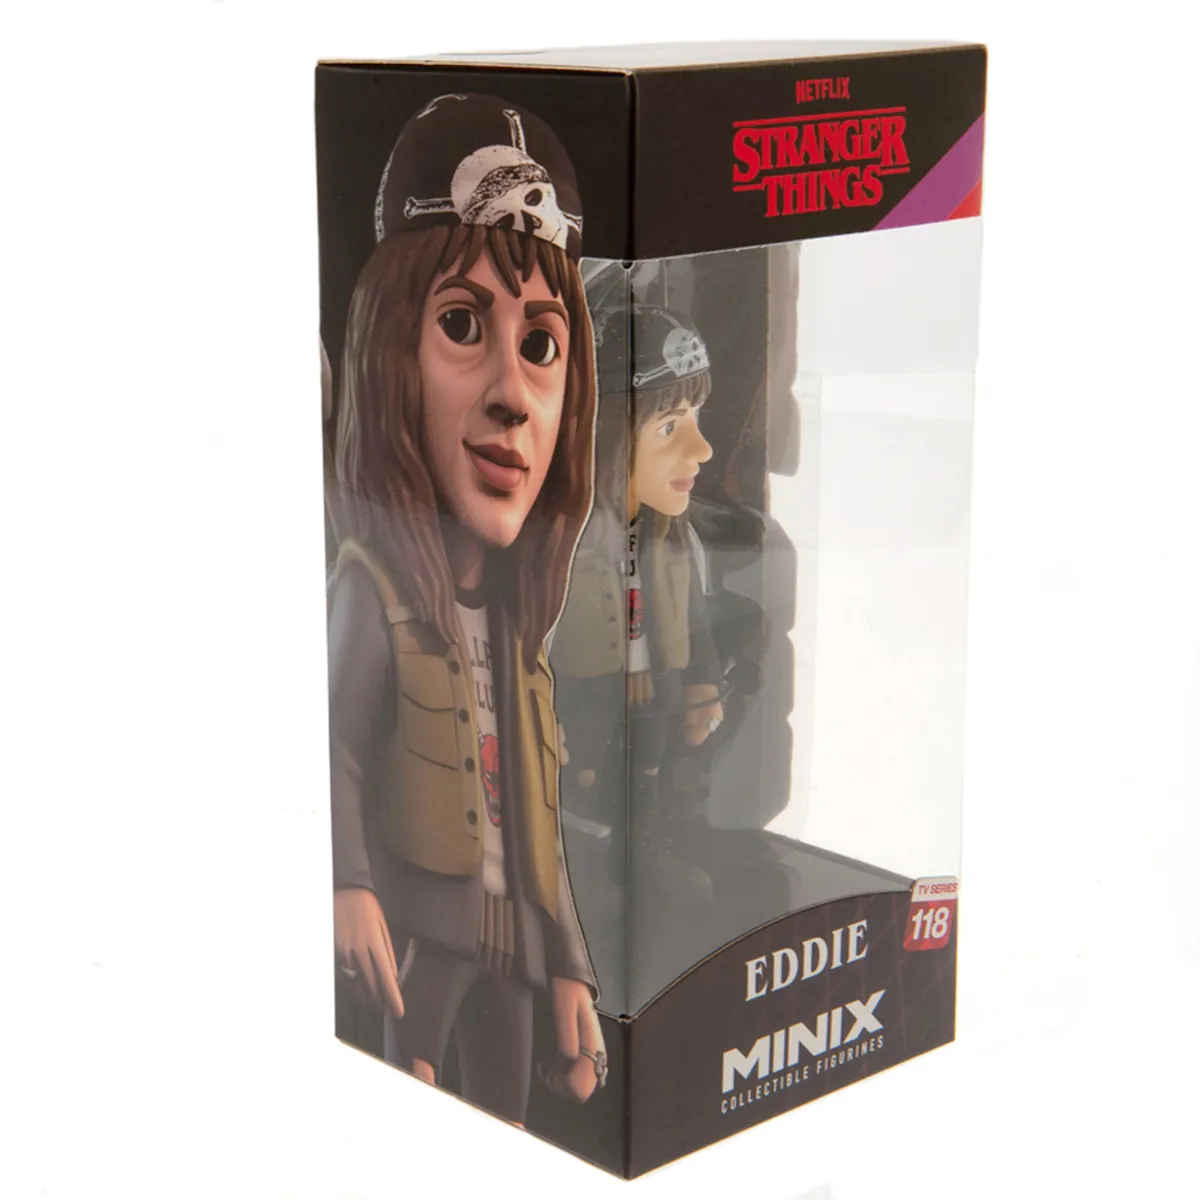 Bandai Minix Stranger Things Eddie Model, Collectable Eddie Stranger Things  Figure, Bandai Minix Stranger Things Merchandise Range